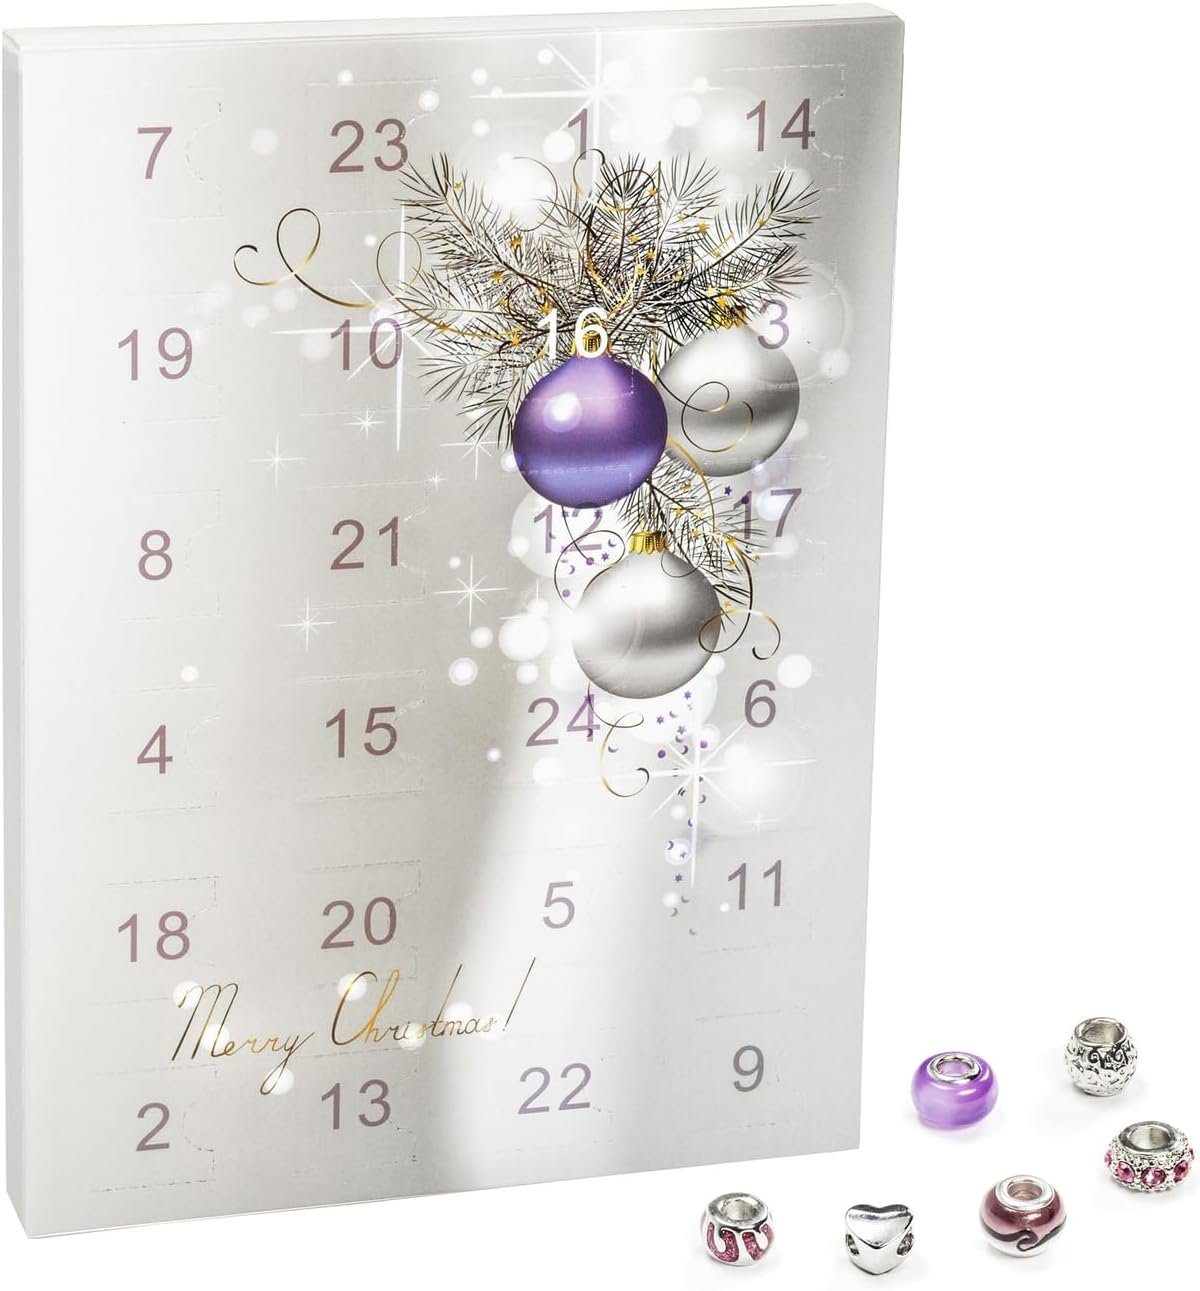 VALIOSA Schmuck-Adventskalender, Halskette, Perlen-Anhänger Armband 22 Merry + individuelle Christmas'